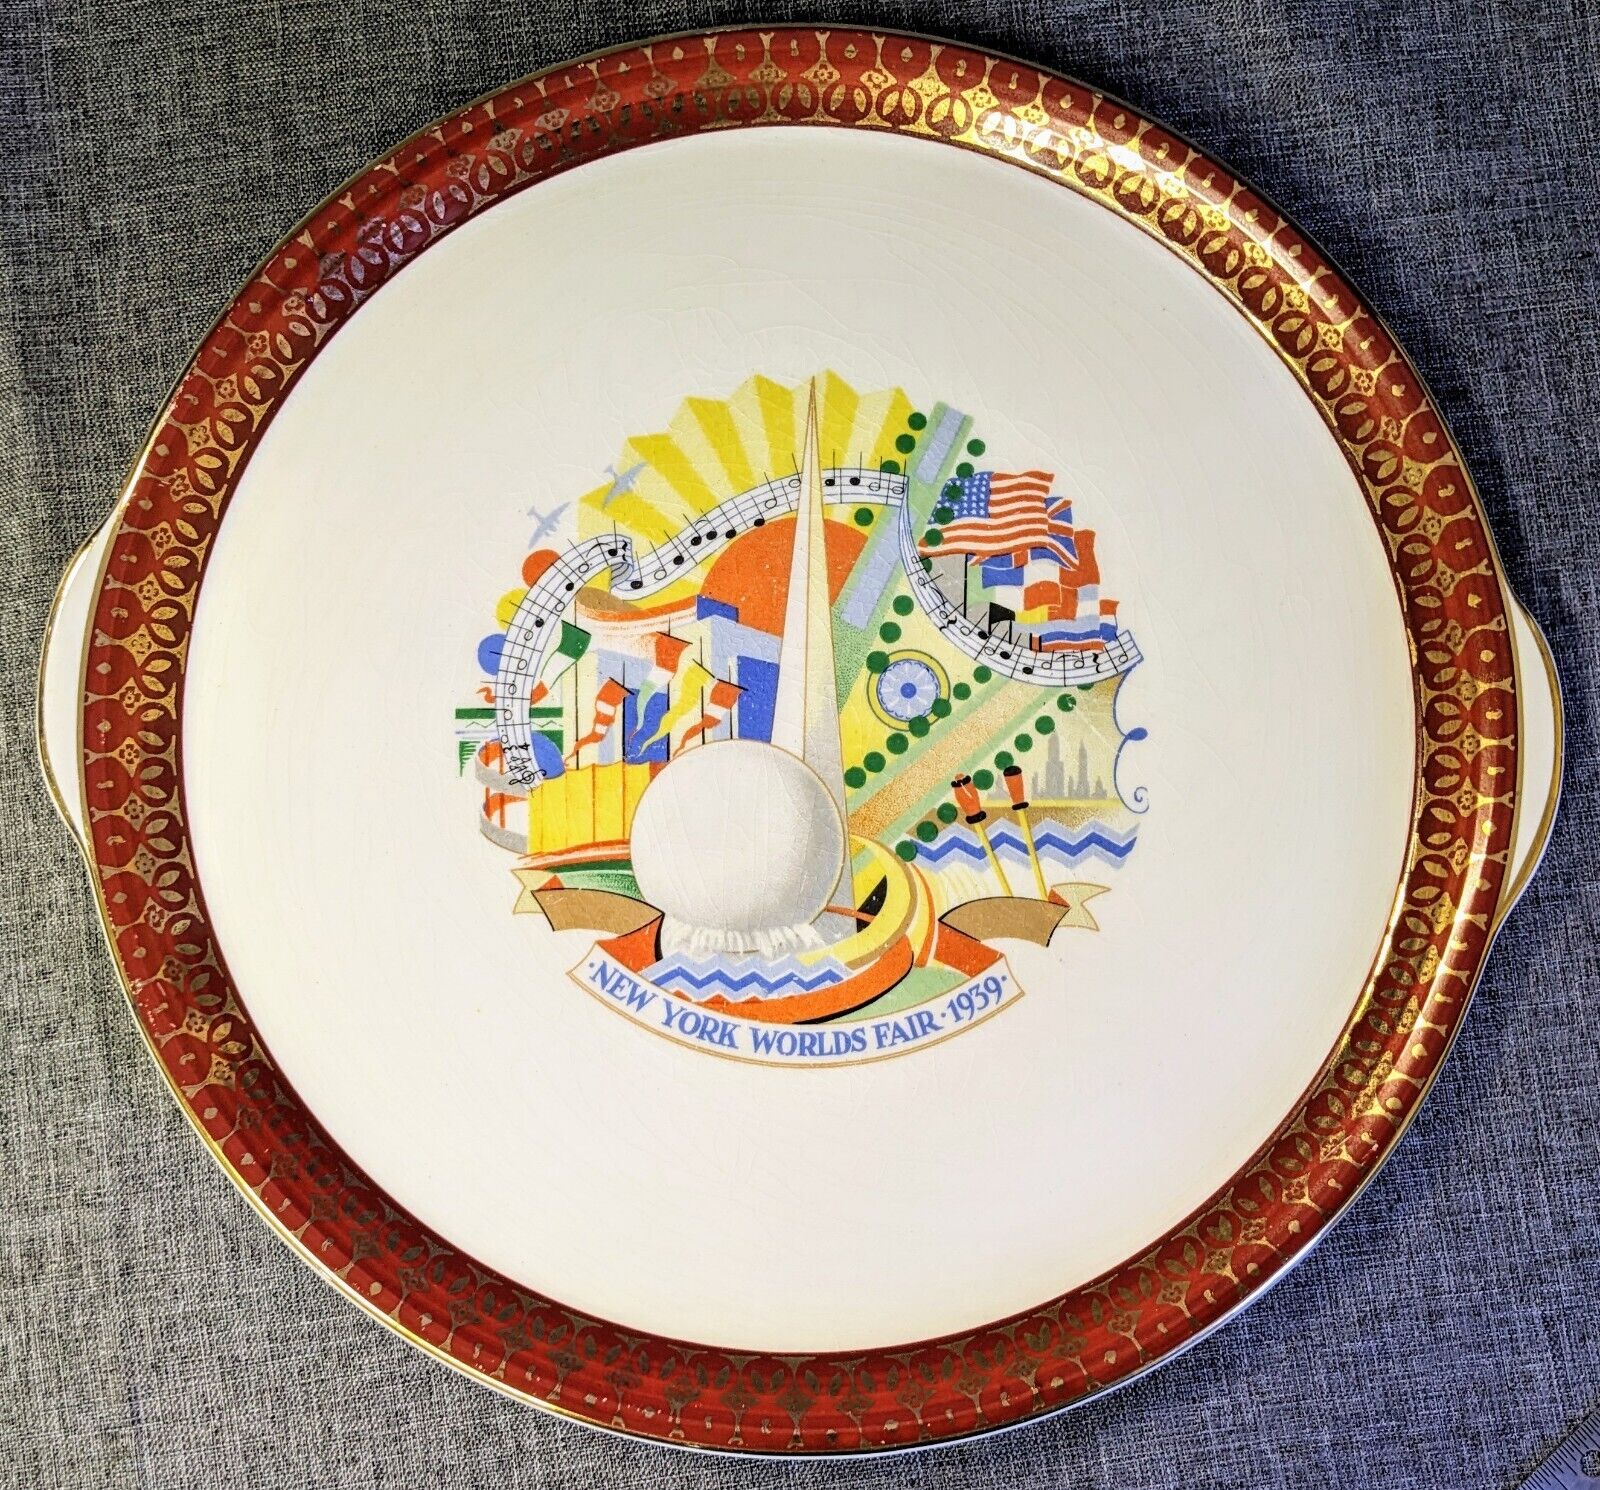 1939 New York World's Fair Cronin China Serving Plate - Beautiful